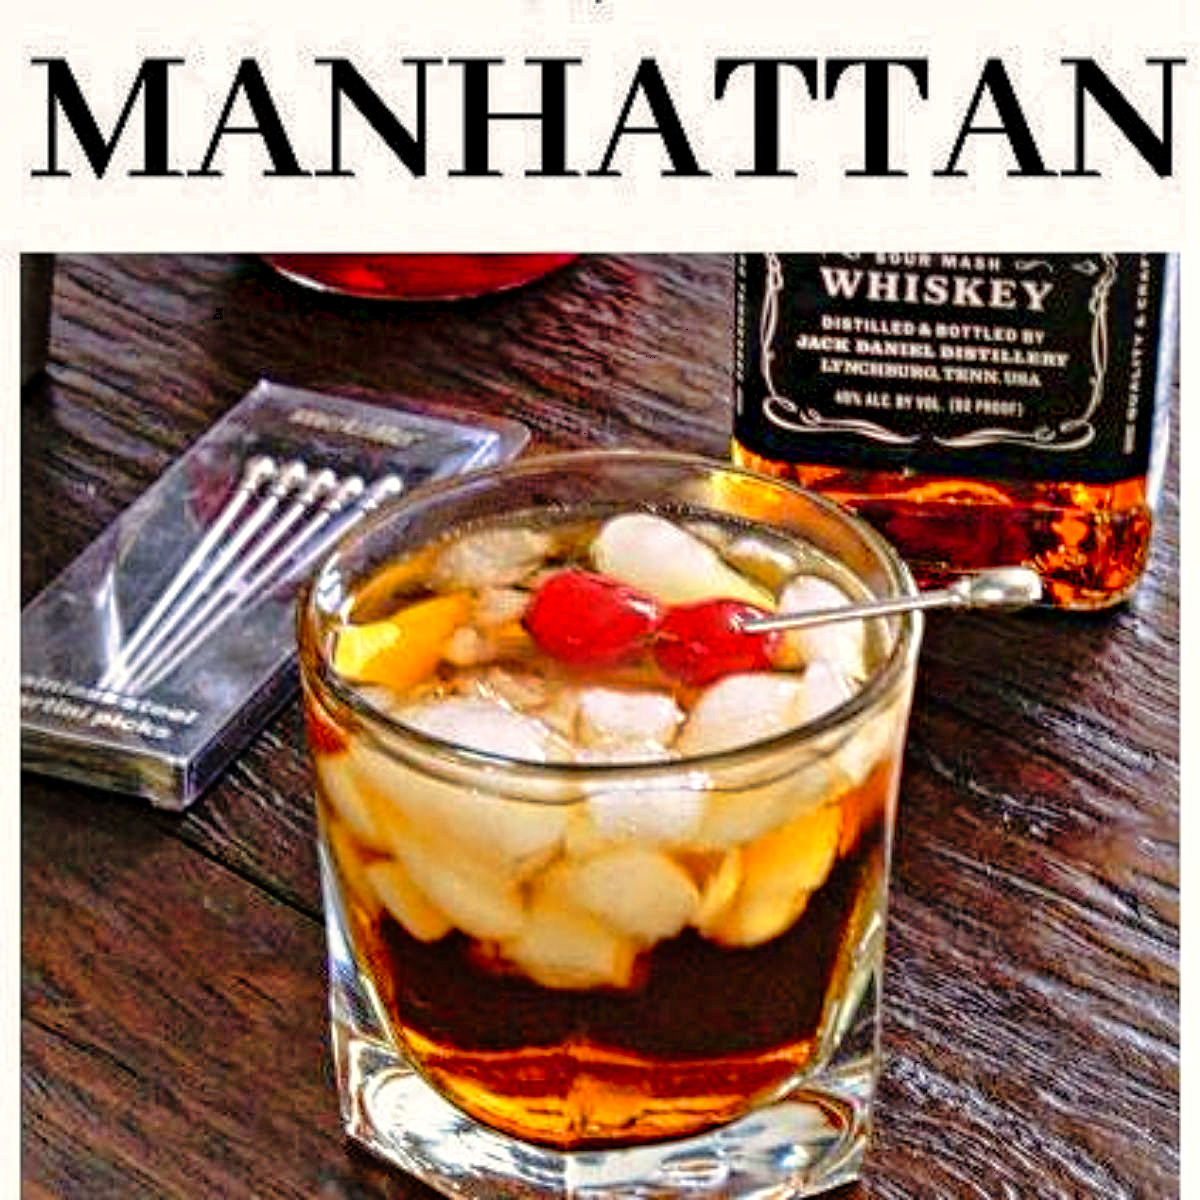 15. Jack Daniels Manhattan - Jack Daniels cocktails